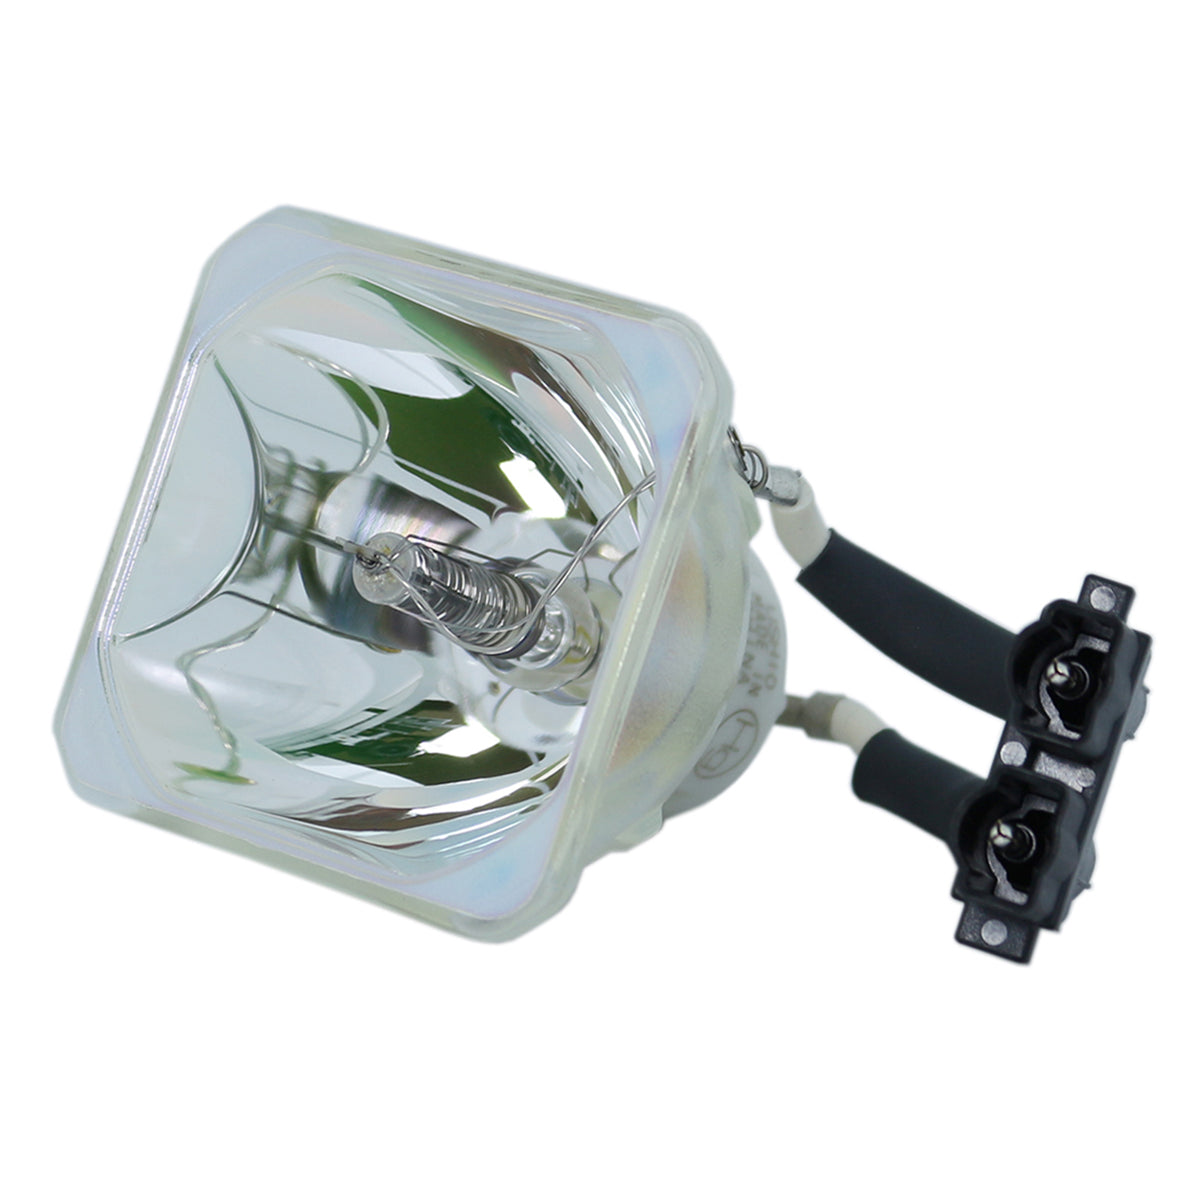 Geha 60-201913 Ushio Projector Bare Lamp